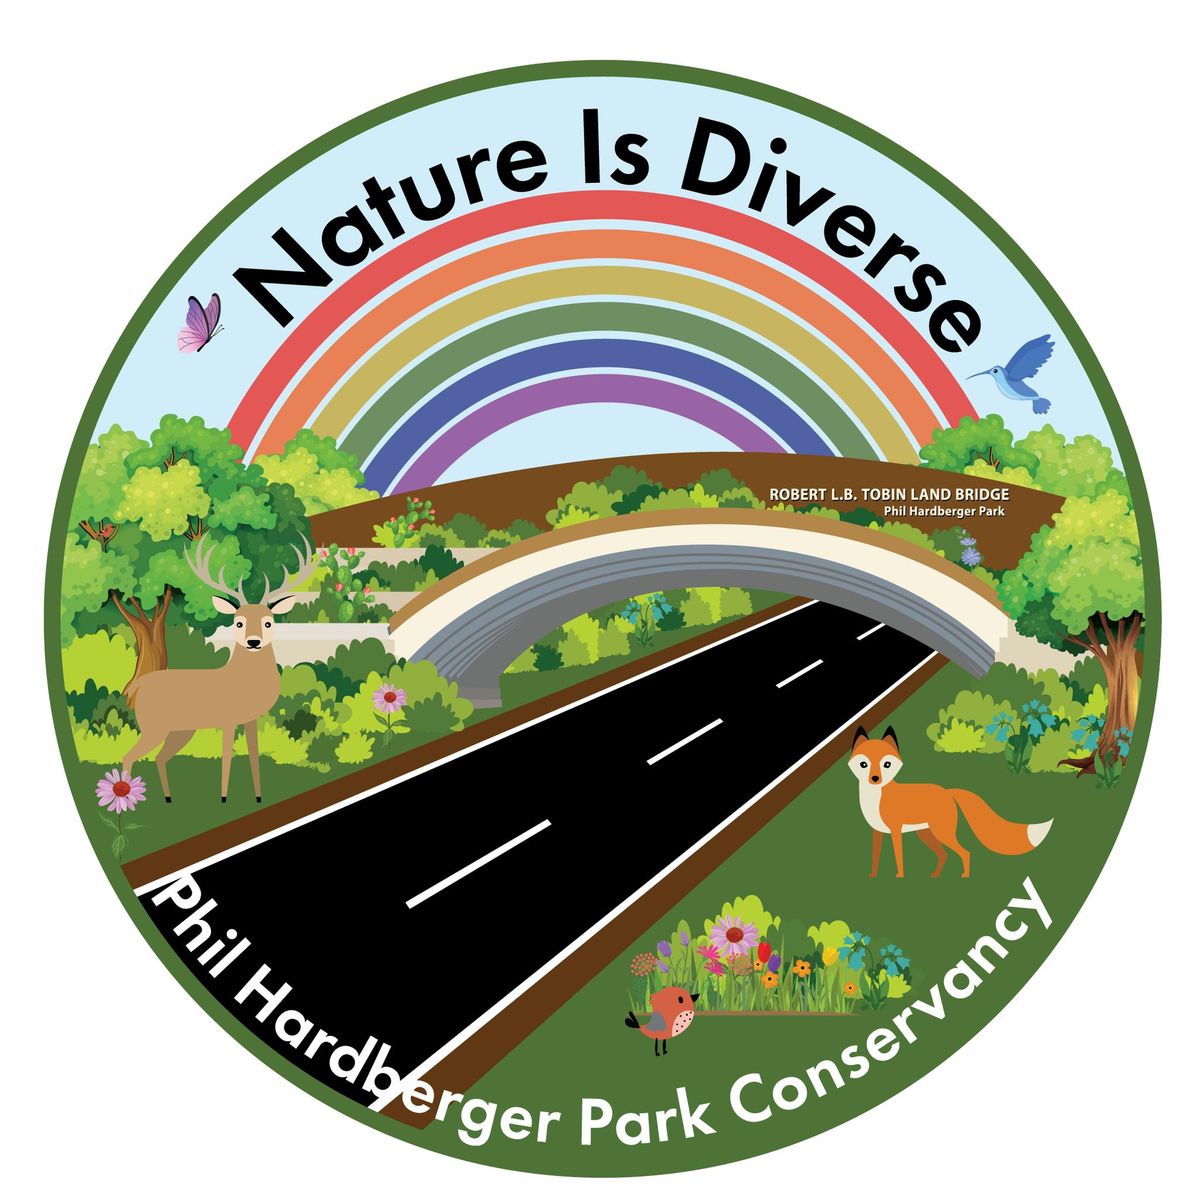 Pride Hike: Let's Celebrate Nature's Diversity